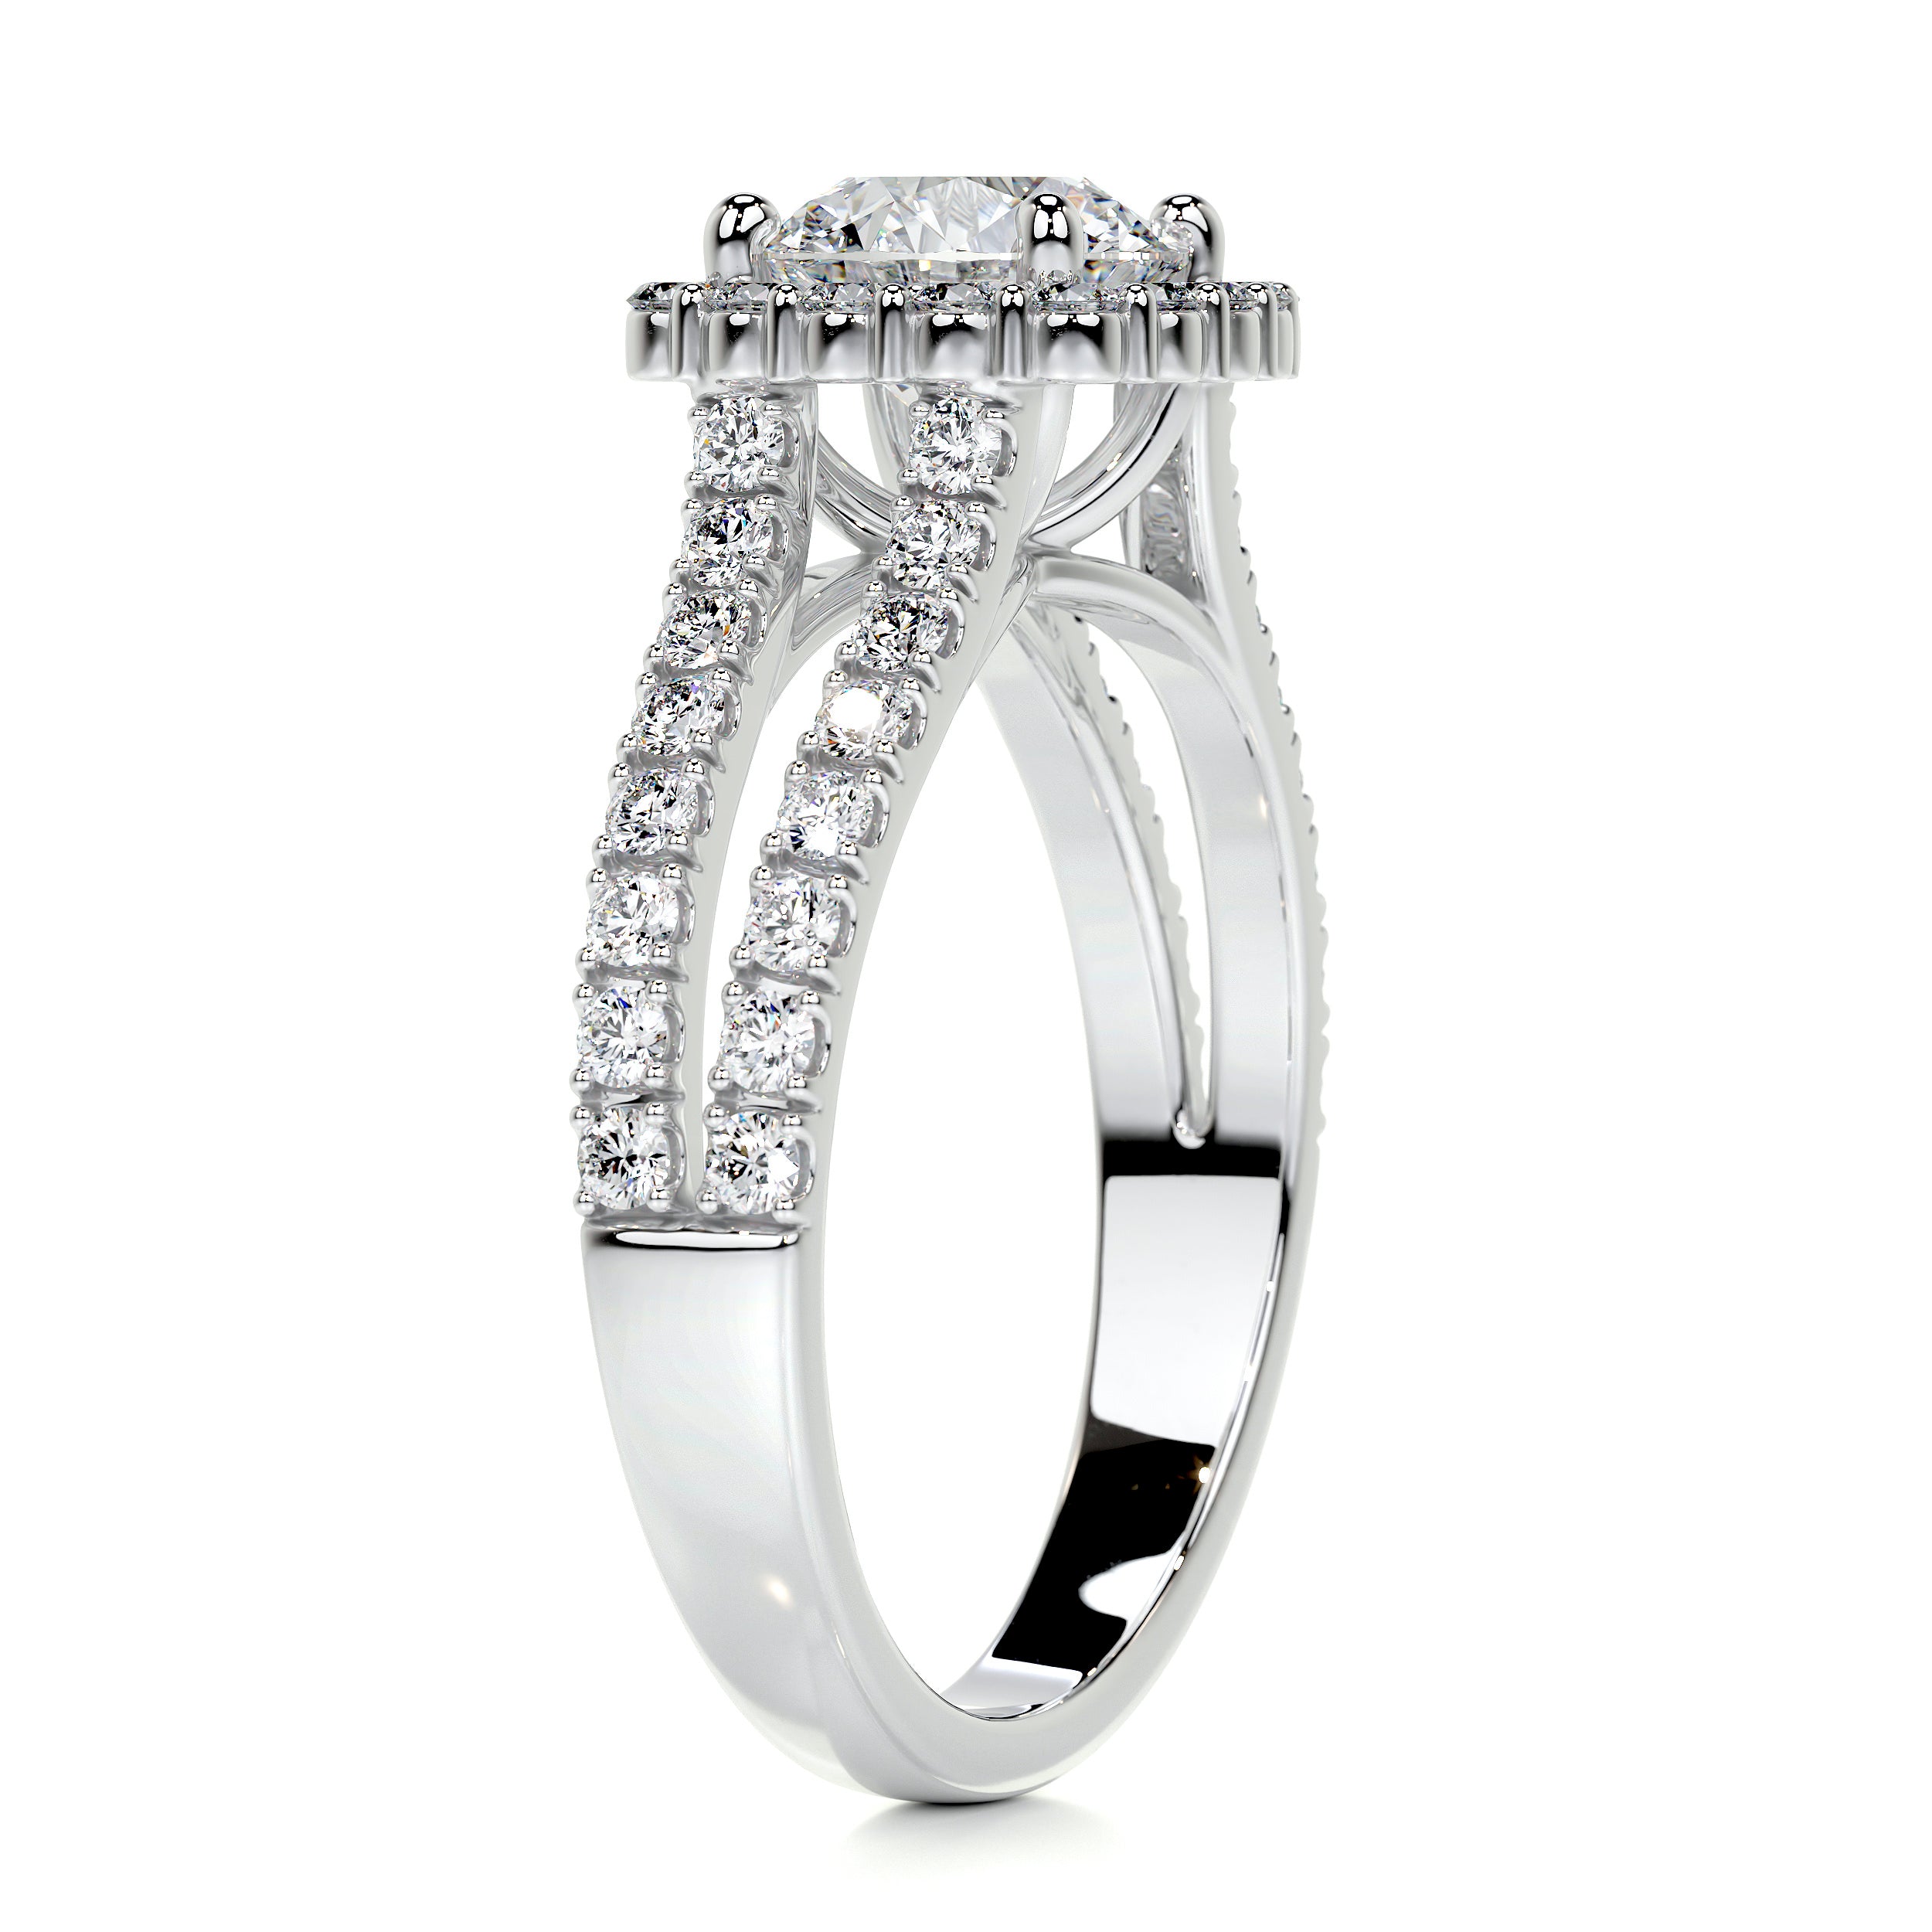 Hilary Diamond Engagement Ring   (3 Carat) -18K White Gold